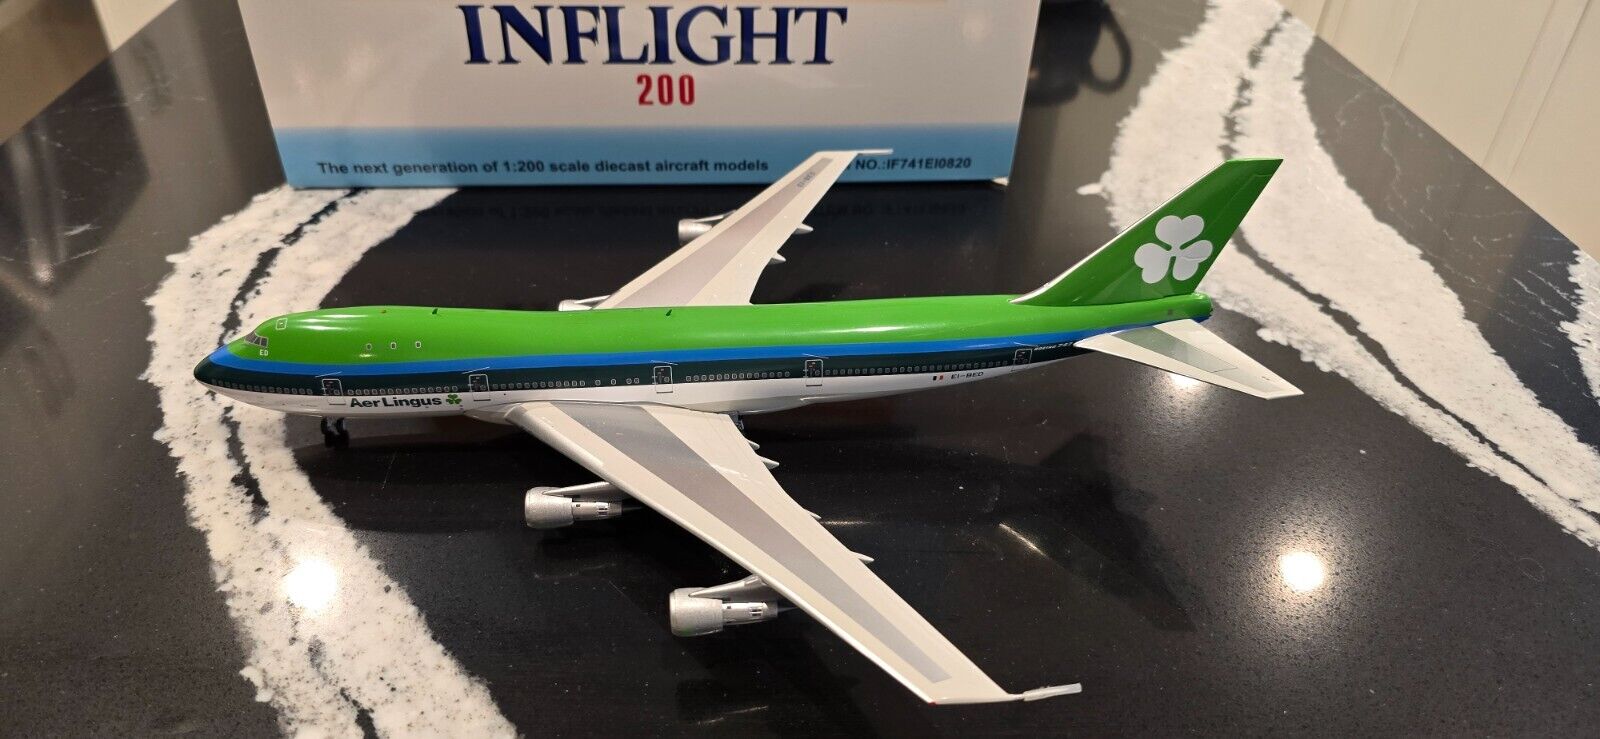 Inflight200 Aer Lingus B 747-130 1:200 IF741EI0820 1980s Colors EI-BED